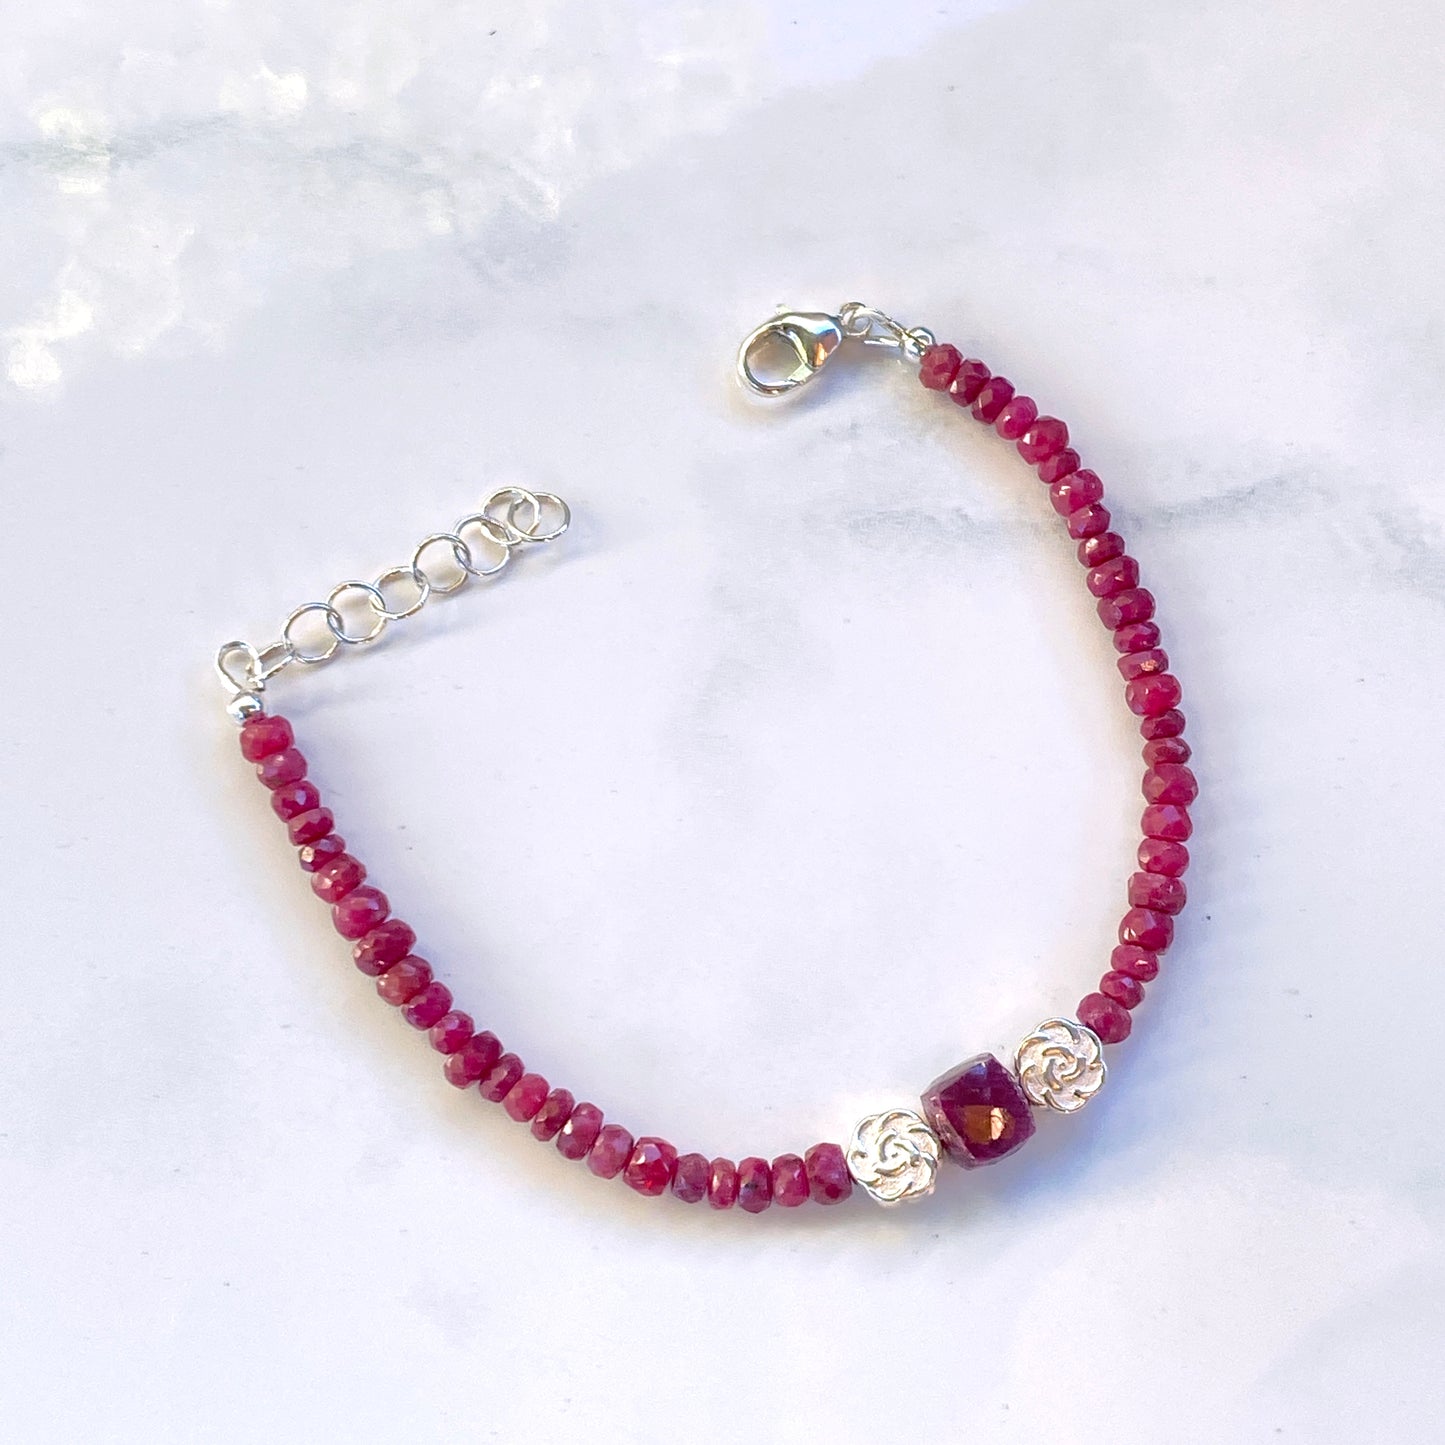 Rubies galore silver clasp bracelet